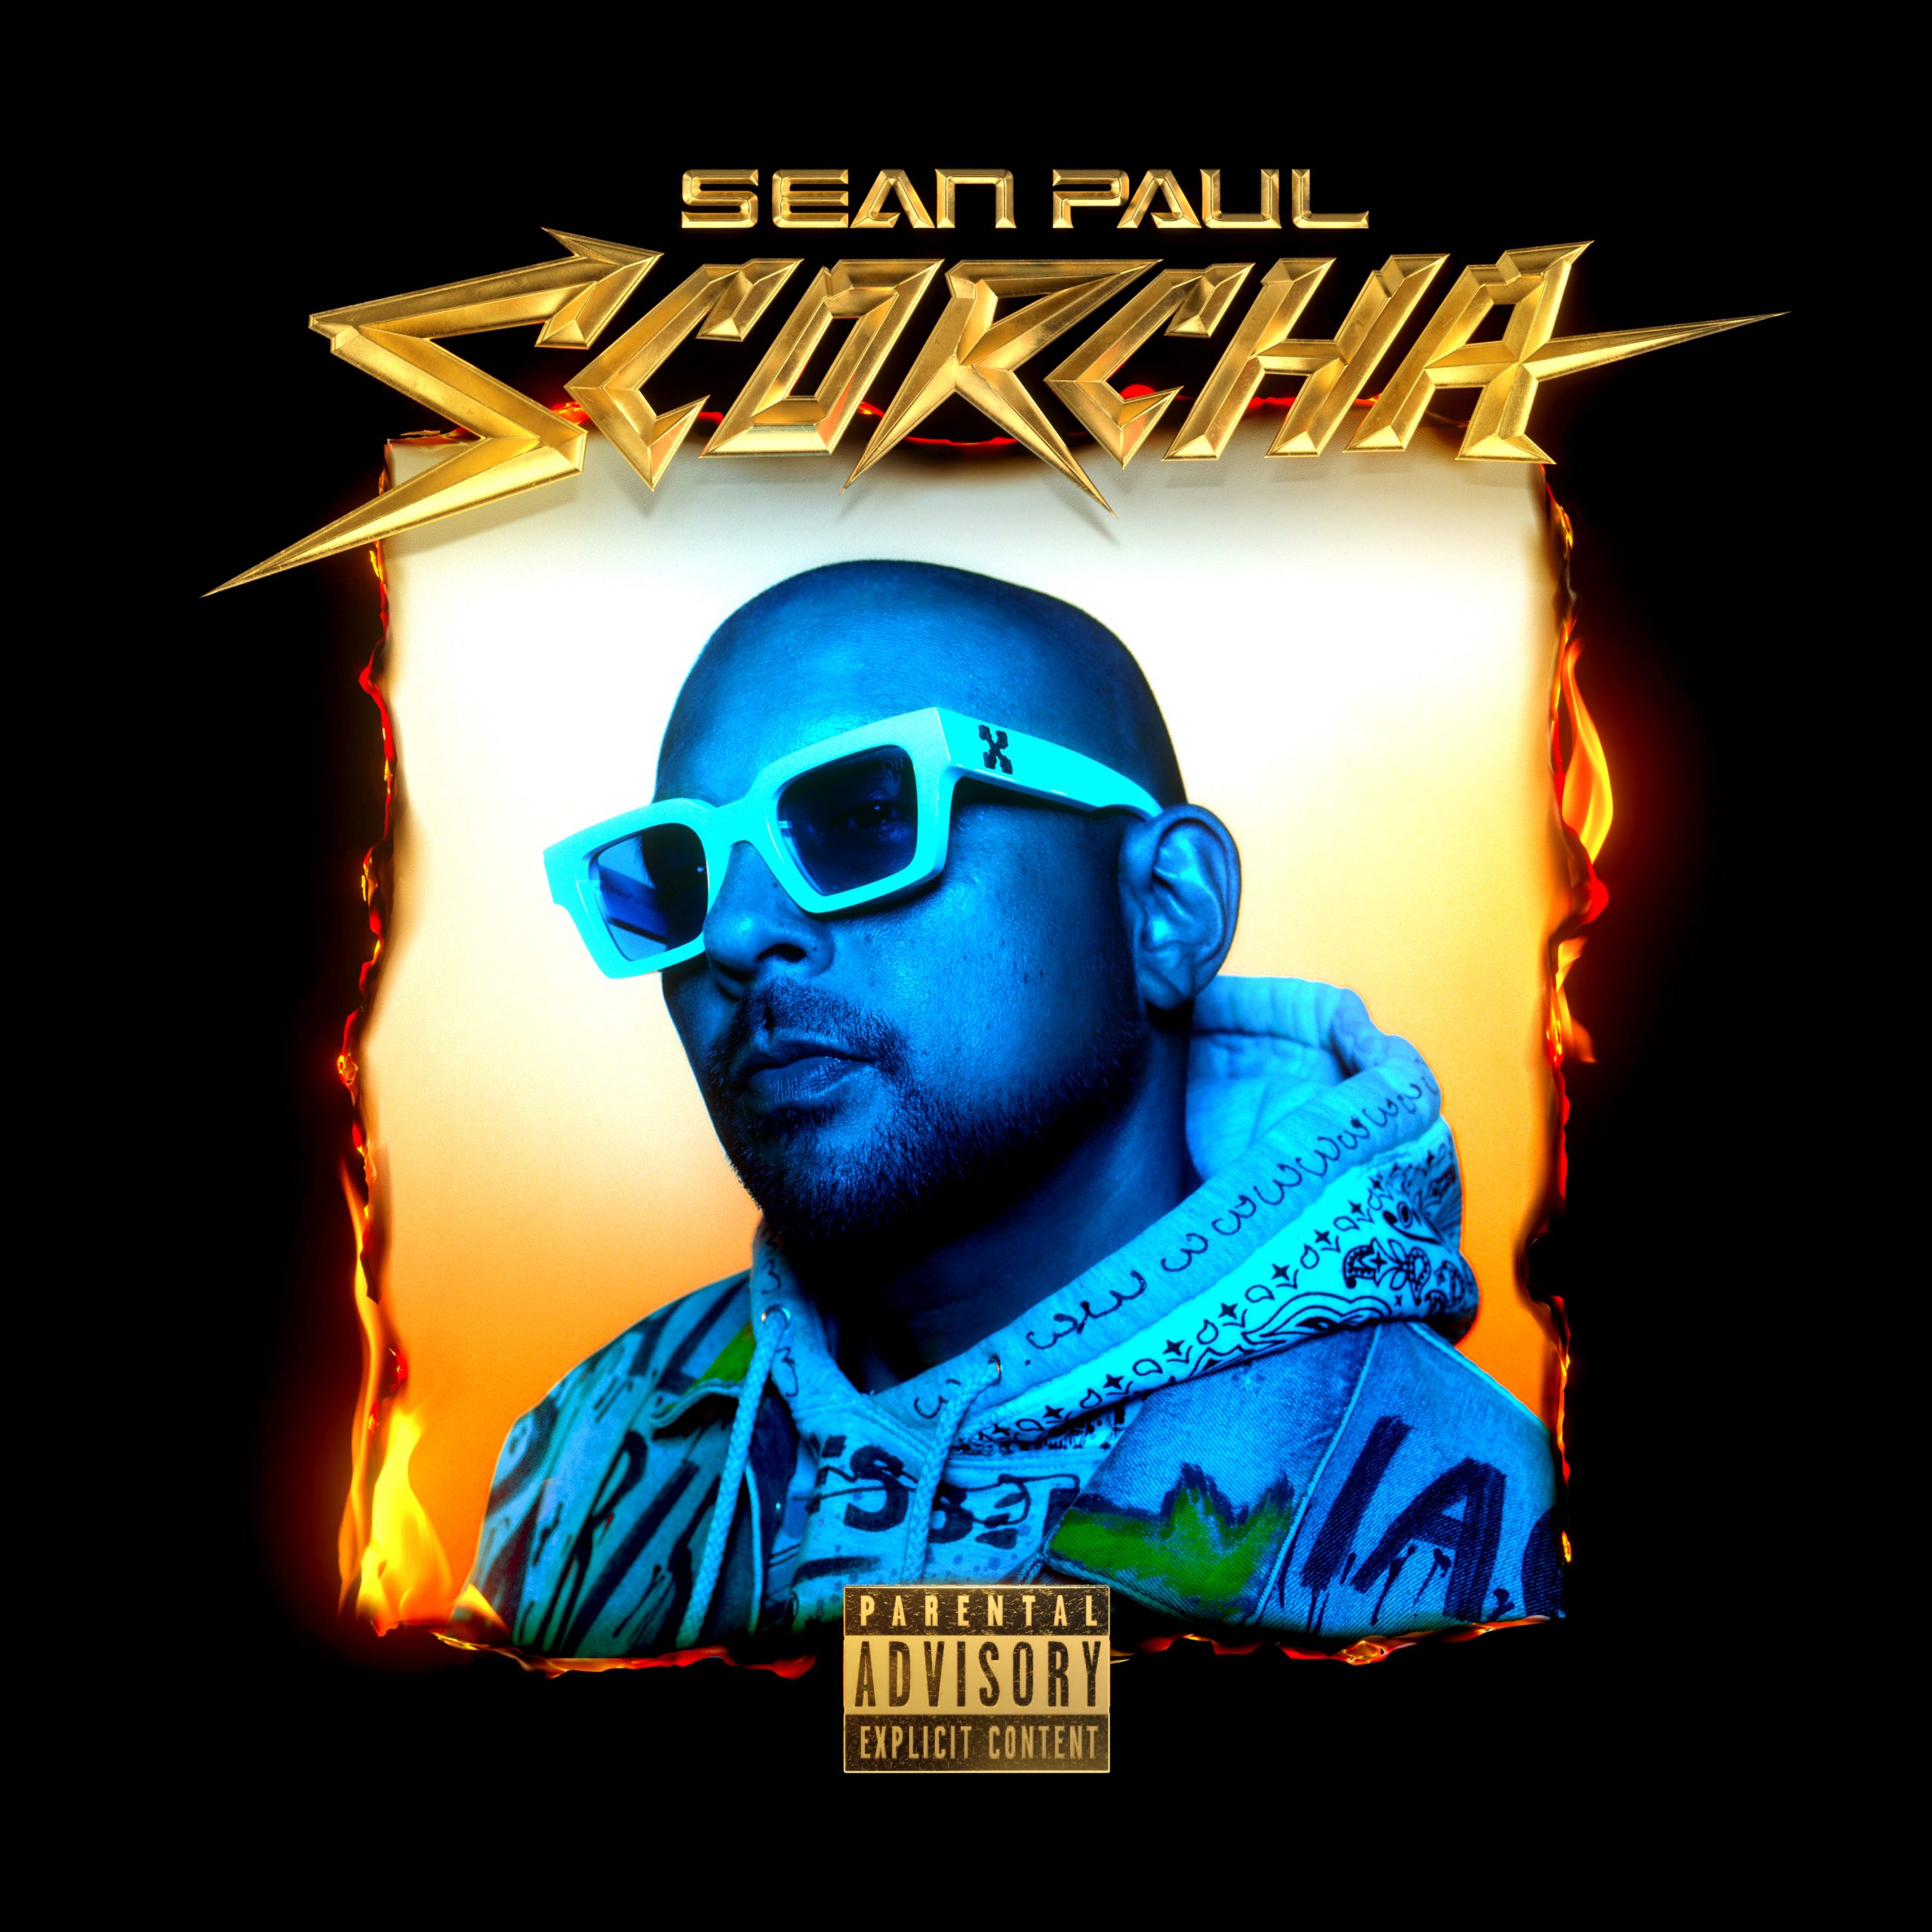 Sean Paul Scorcha cover artwork